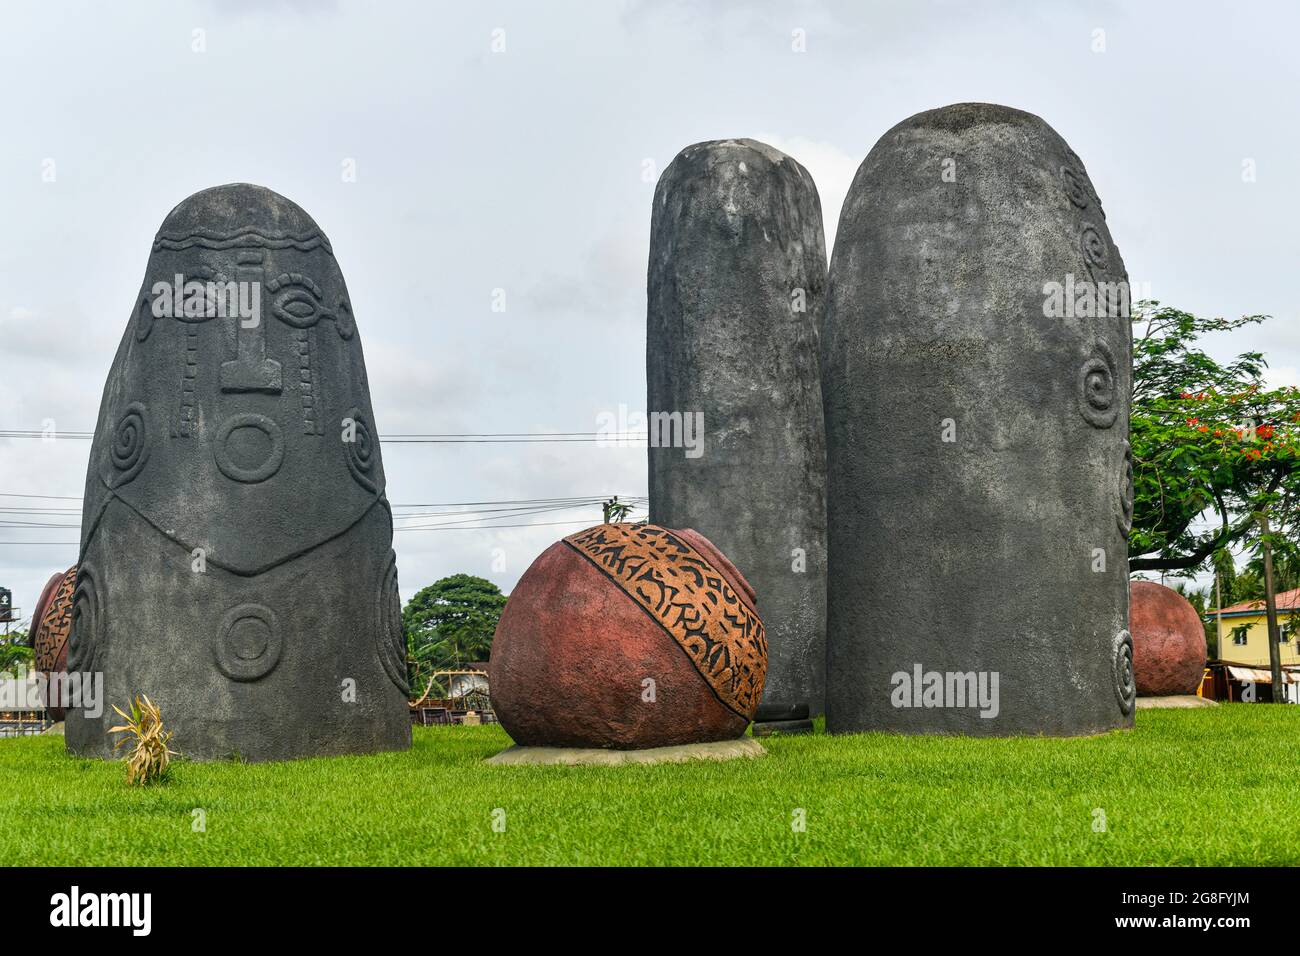 Akom monolith memorial, Calabar, Niger Delta, Nigeria, West Africa, Africa Stock Photo